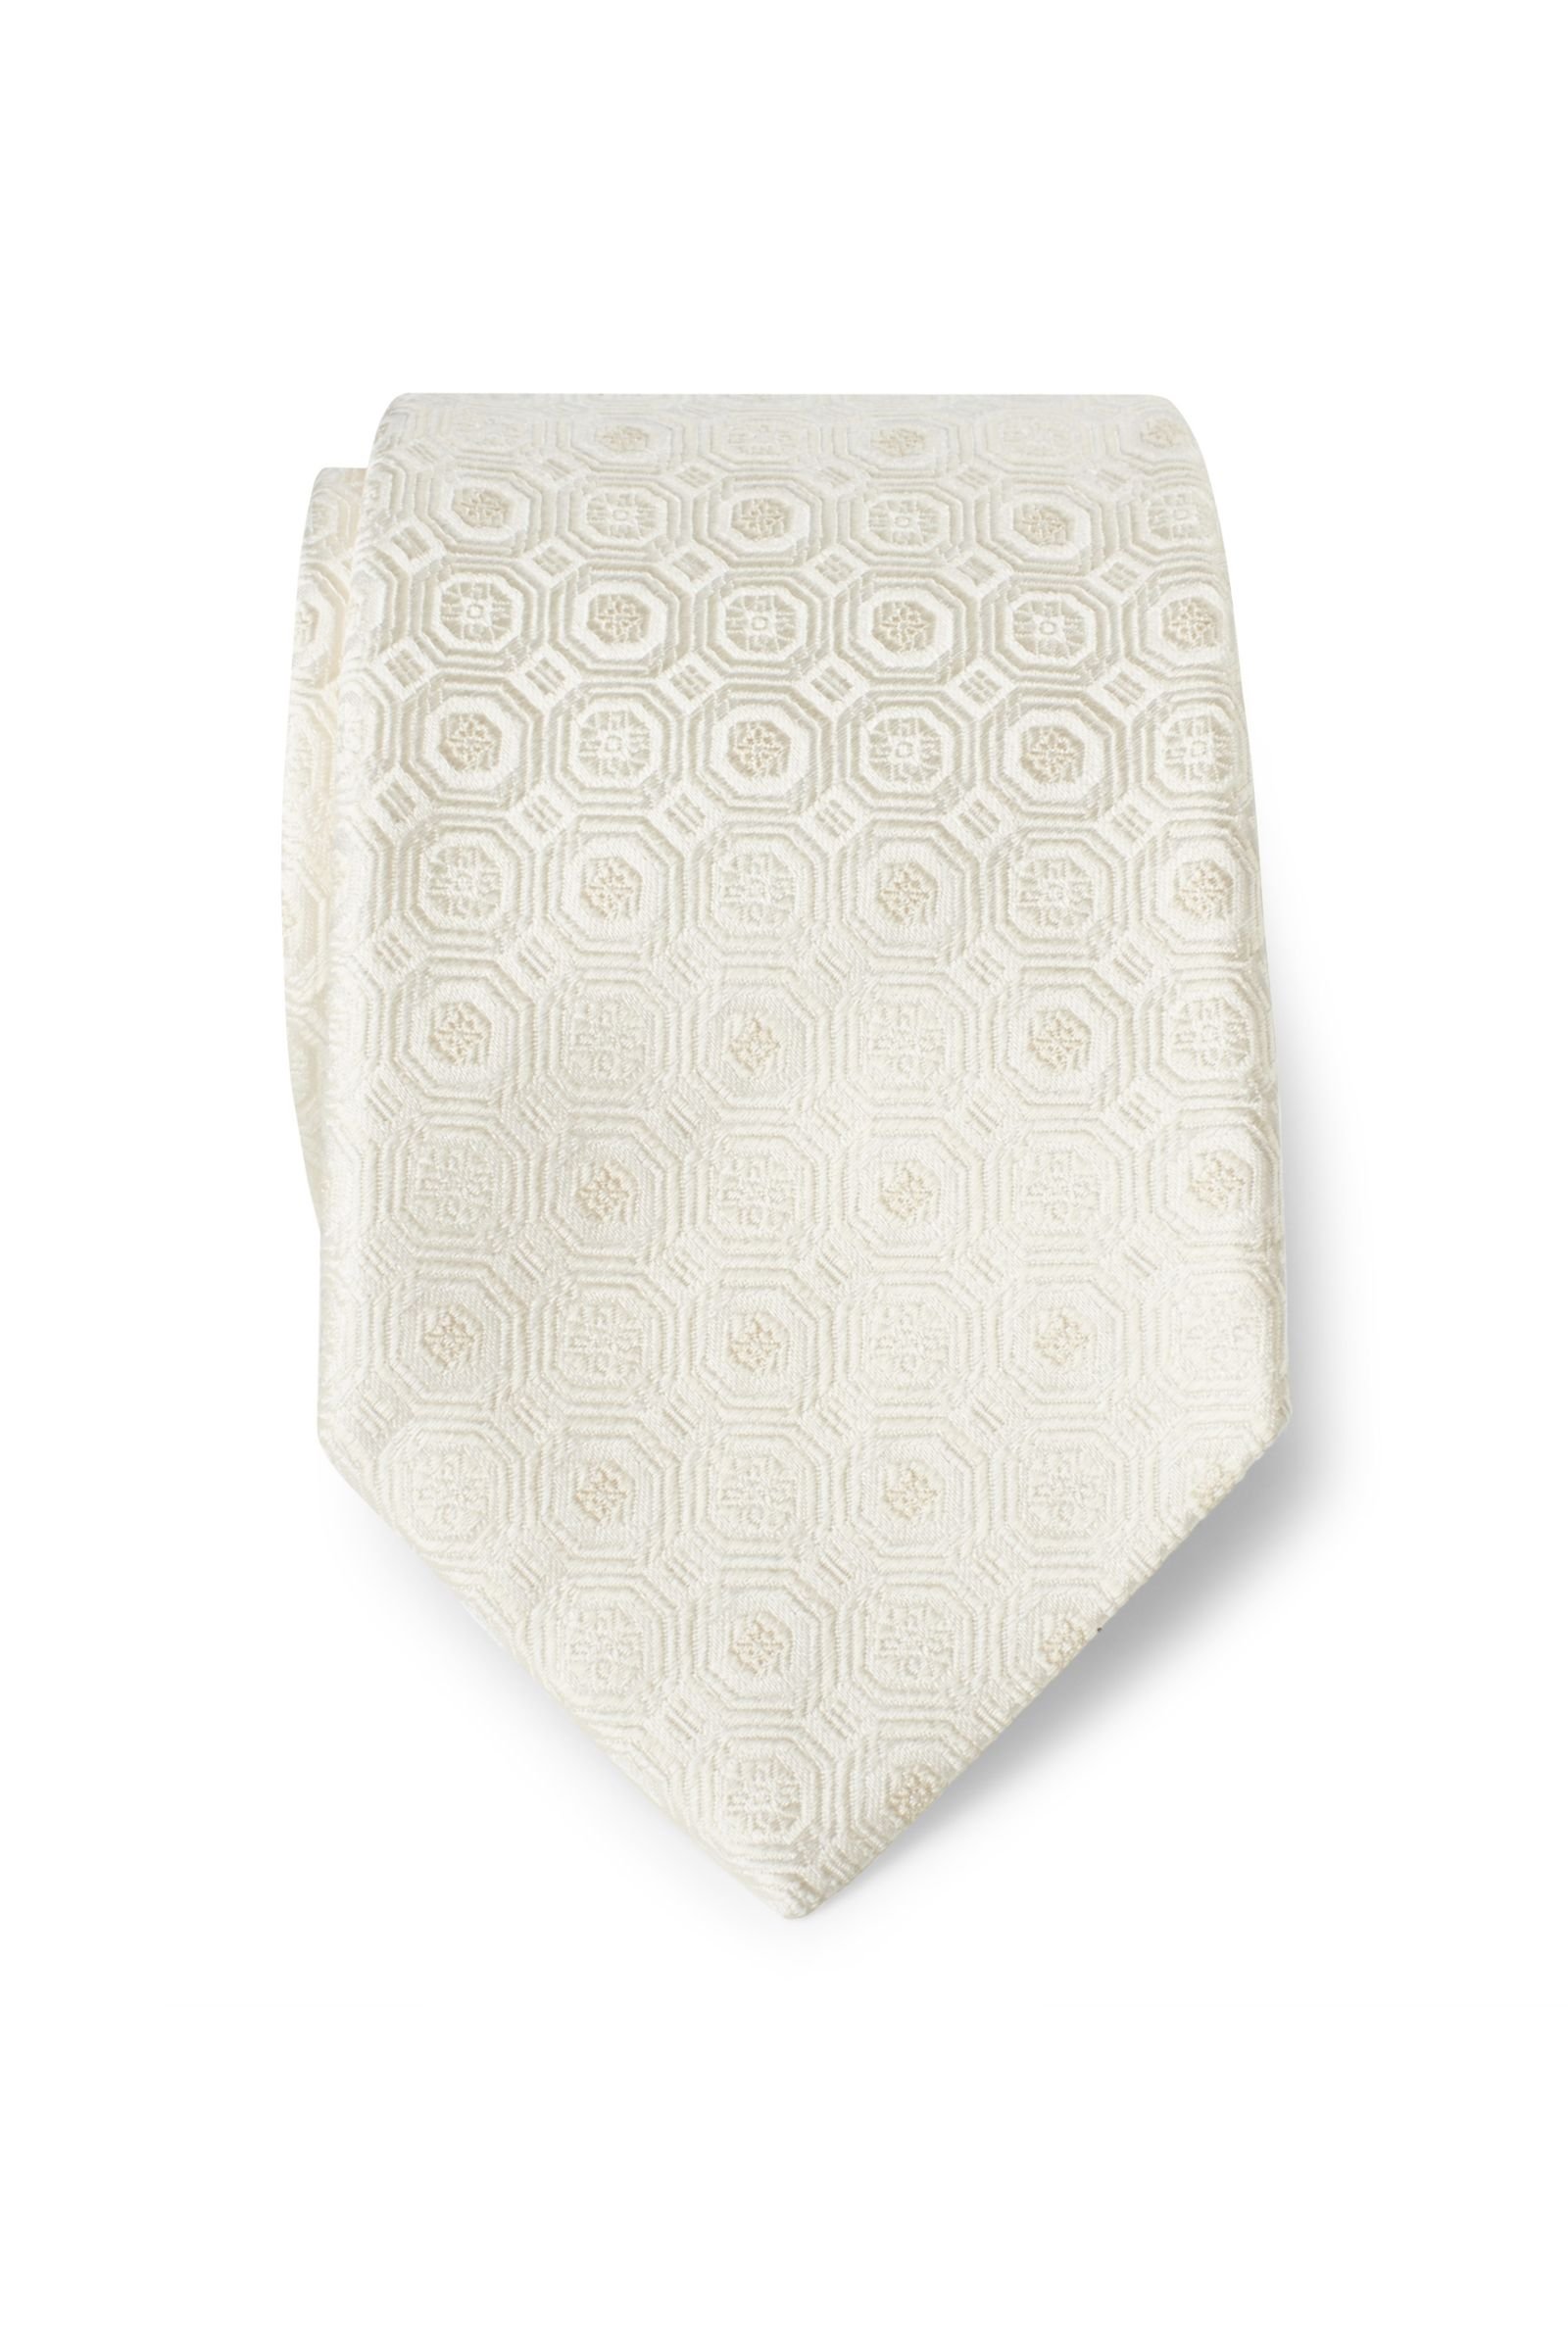 Silk tie cream patterned